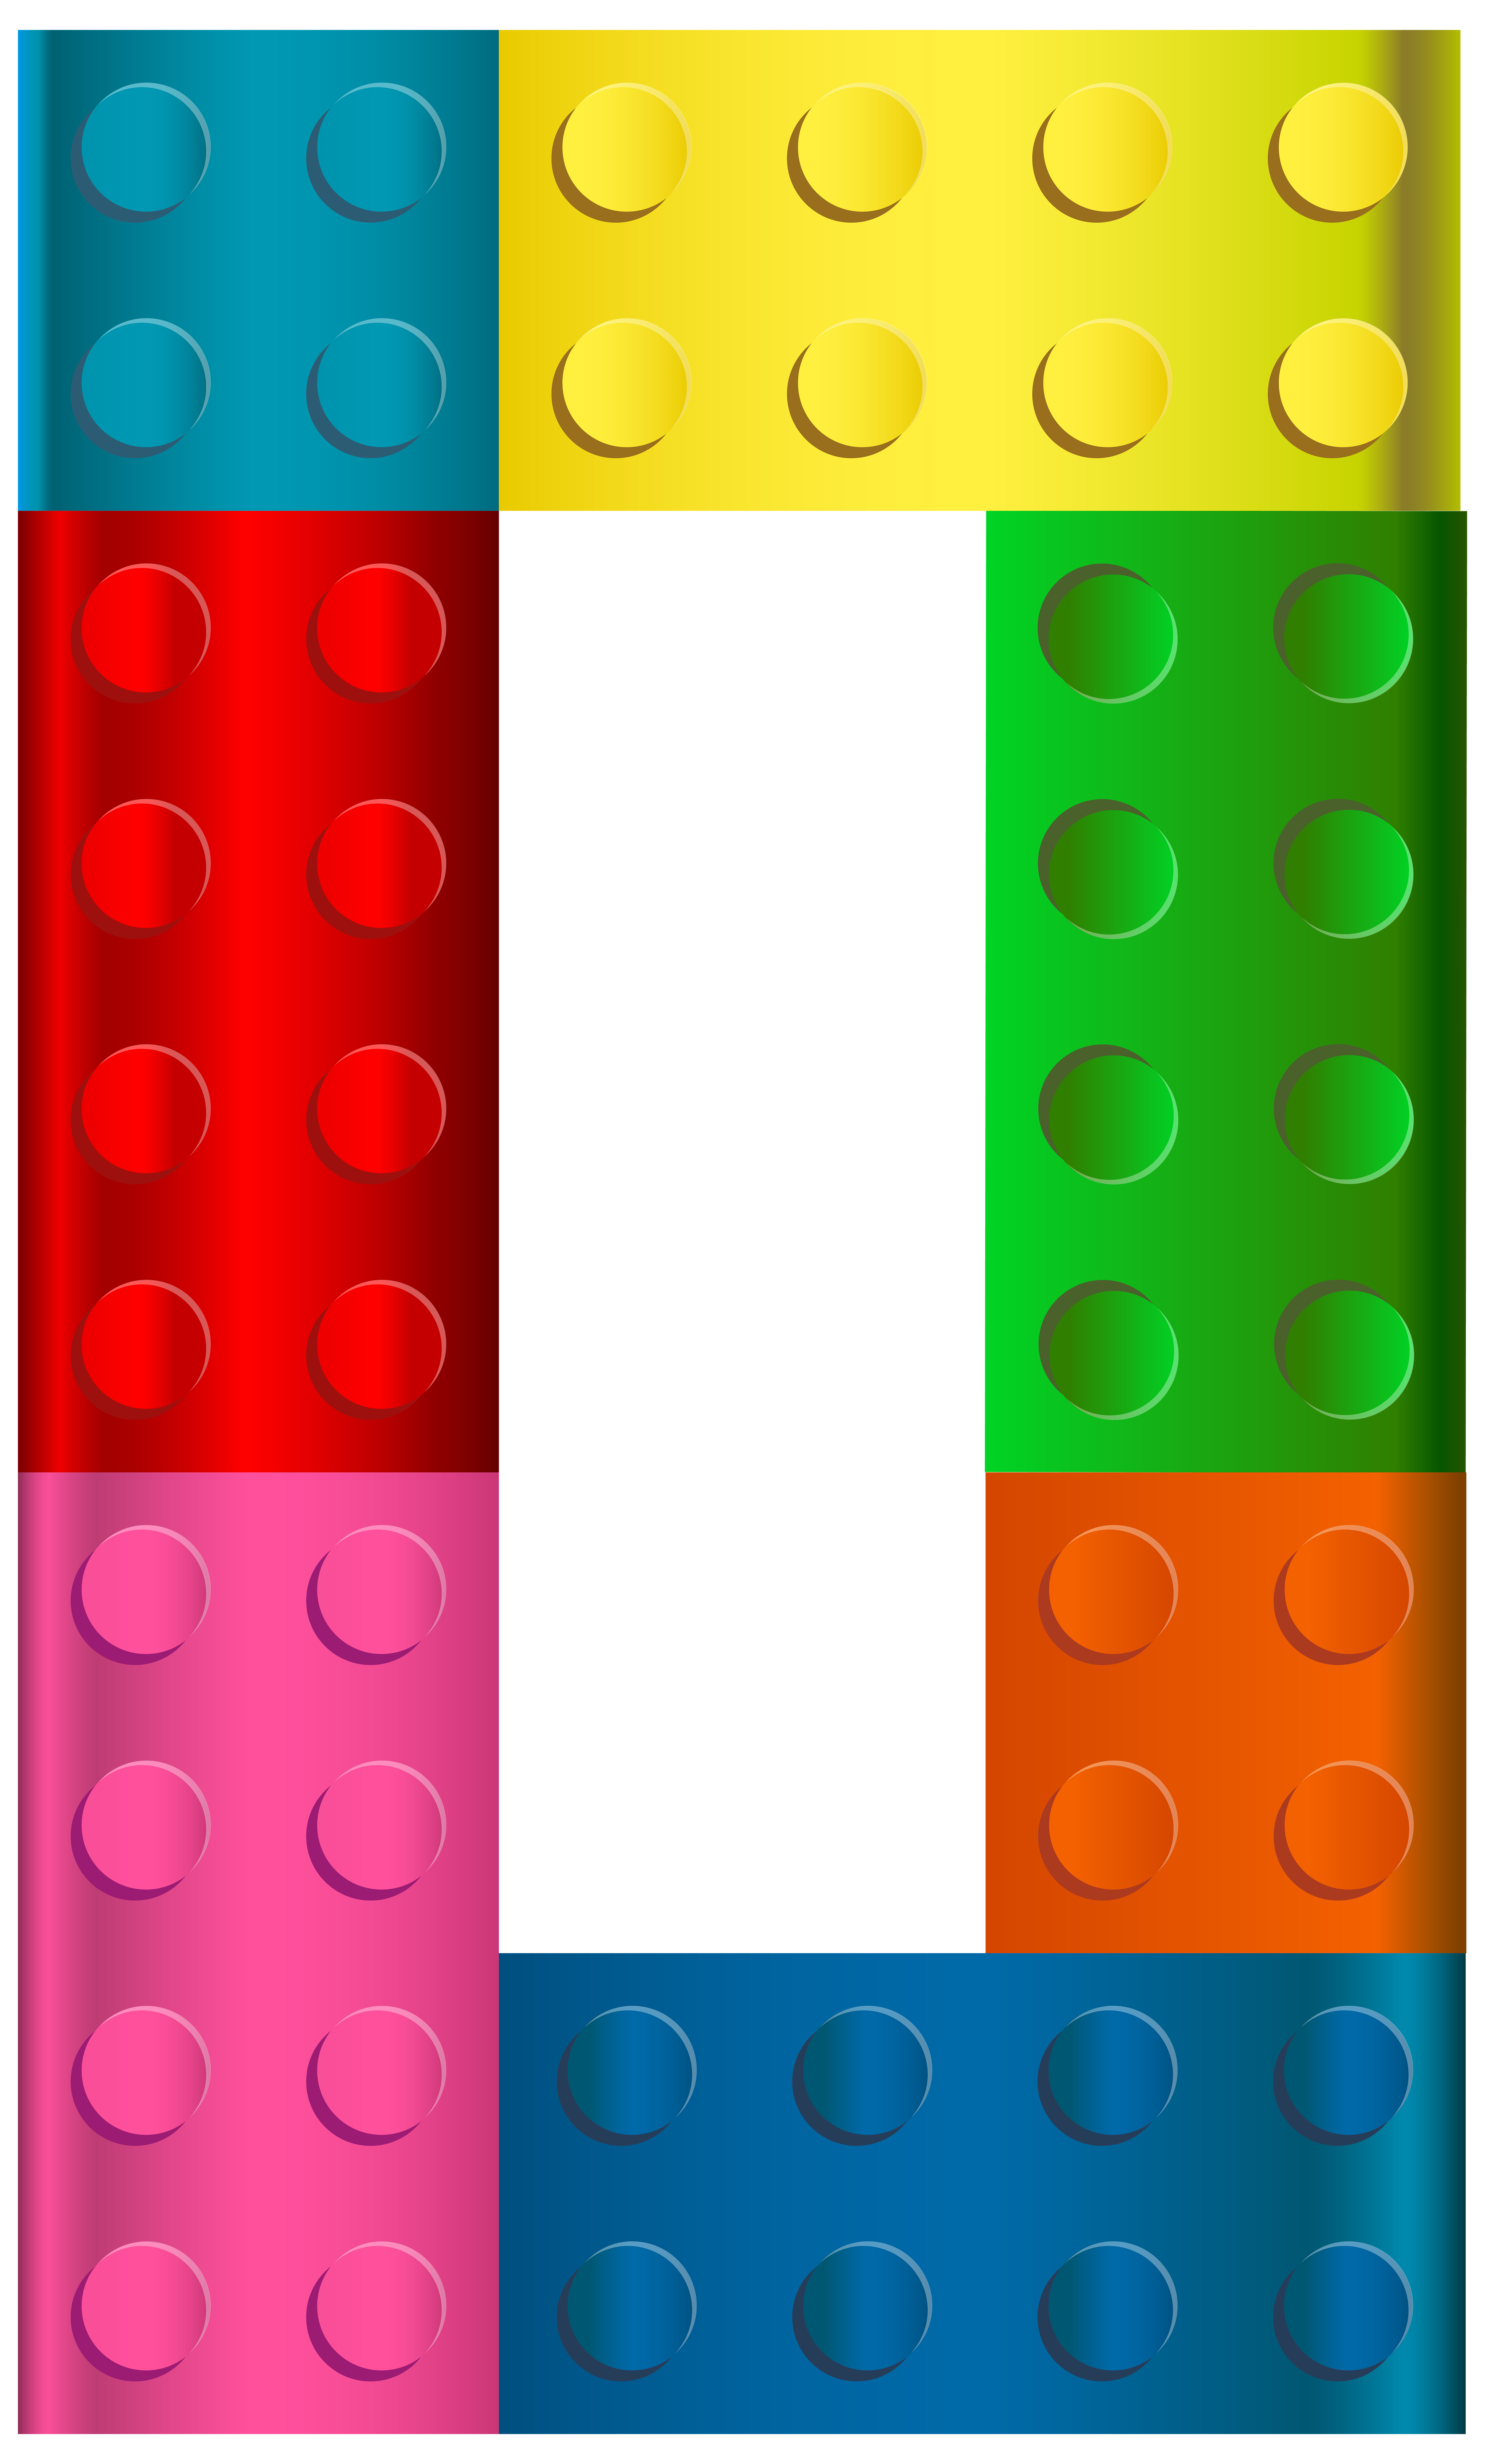 Lego Borders Wallpapers